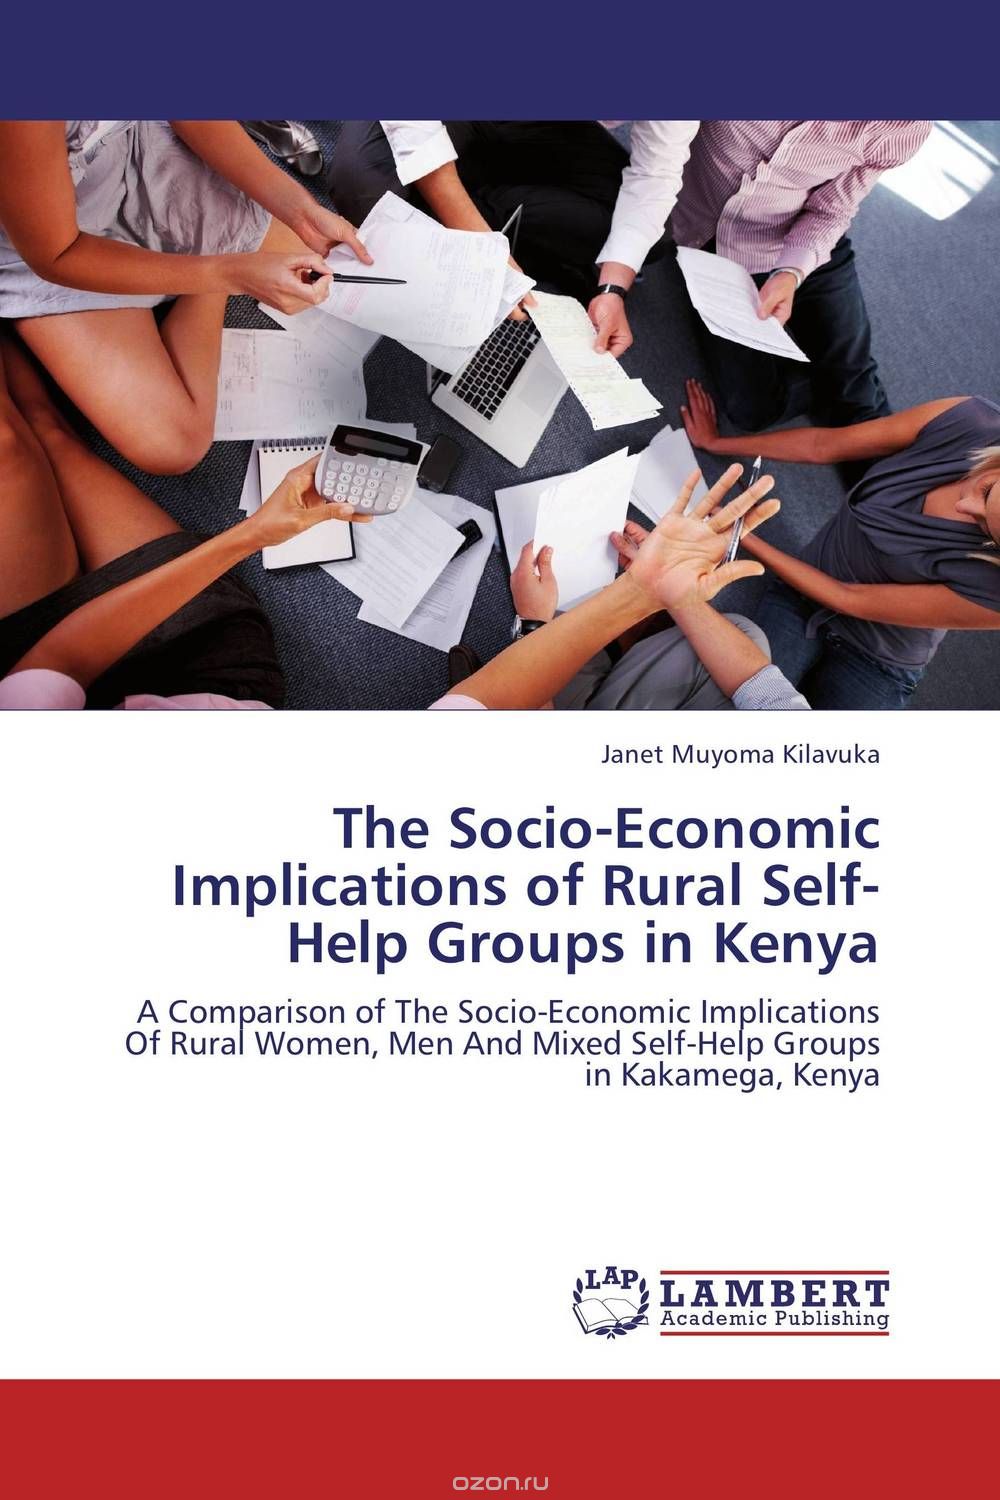 The Socio-Economic Implications of Rural Self-Help Groups in Kenya